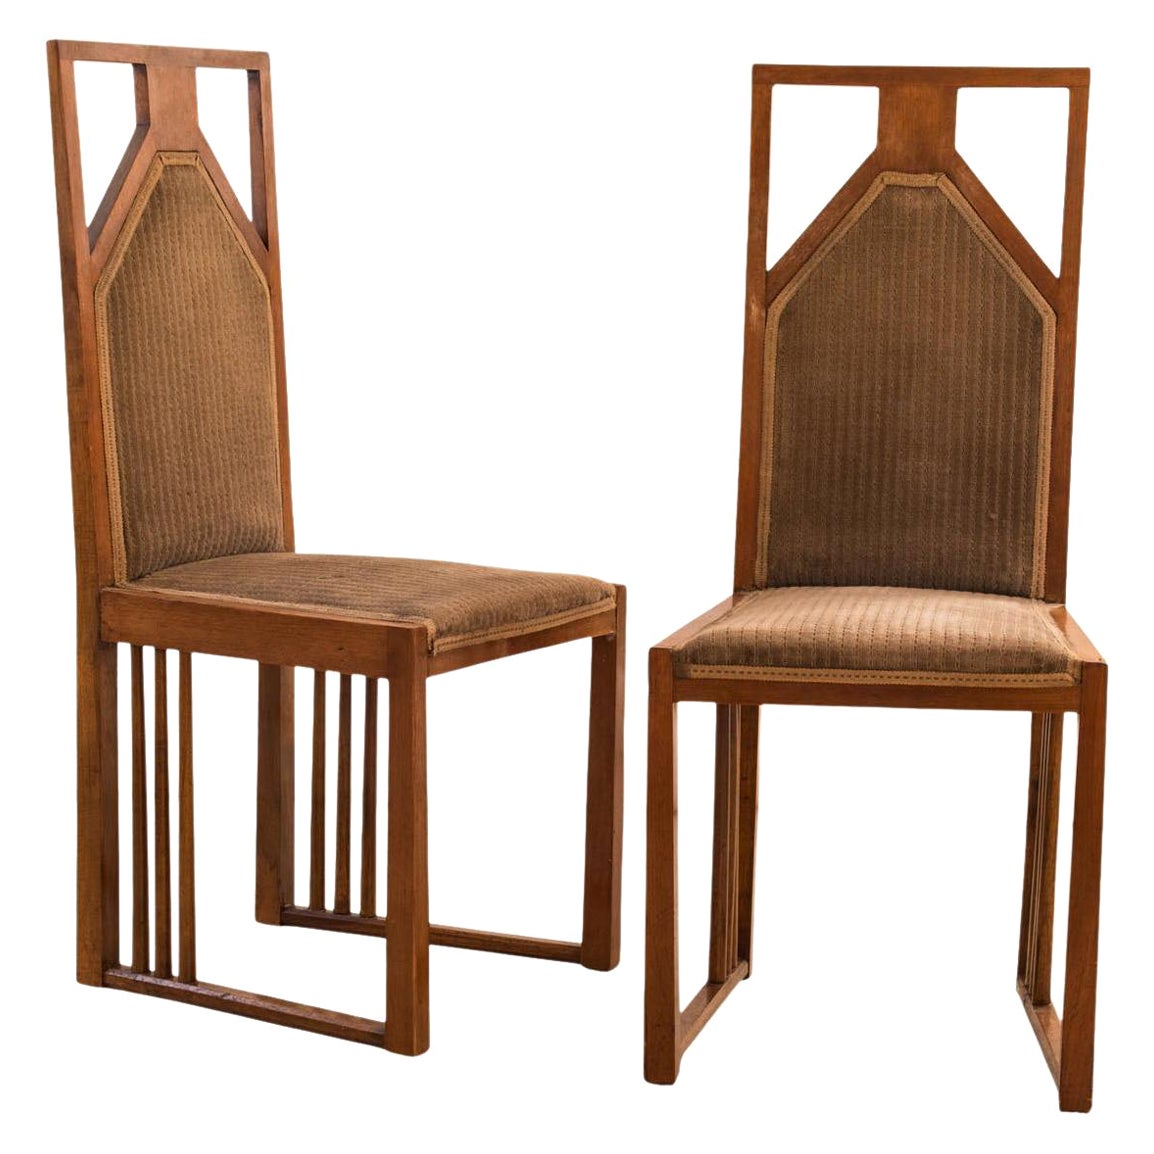 Josef Hoffmann Attr. Pair of Extraordinary Chairs 1905-10 Jugendstil Art Nouveau For Sale